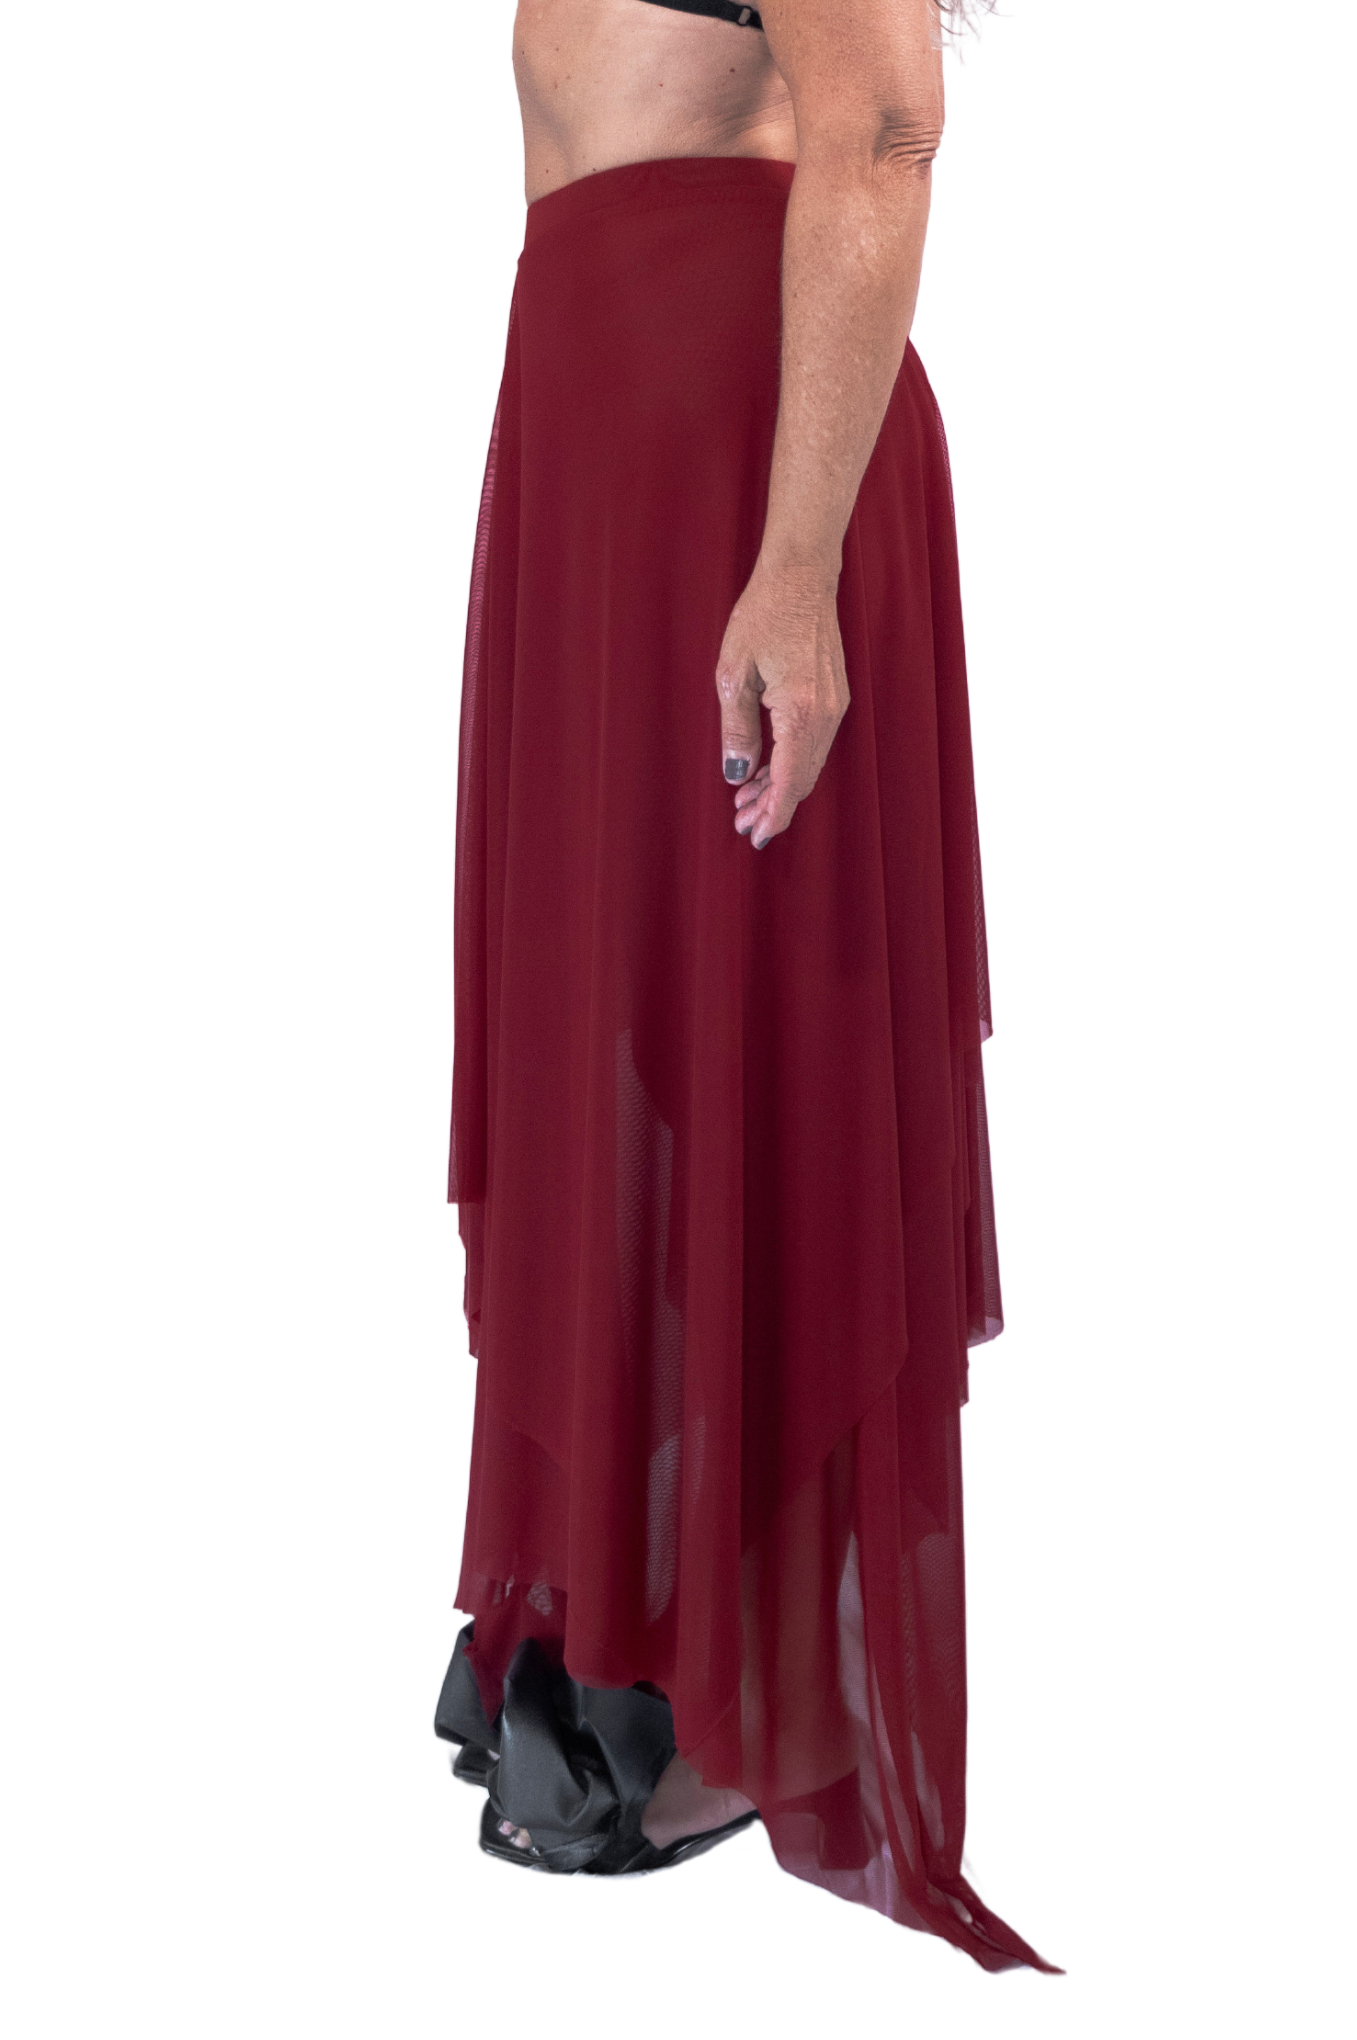 VENUS Transformable Skirt-Dress in Wine Mesh